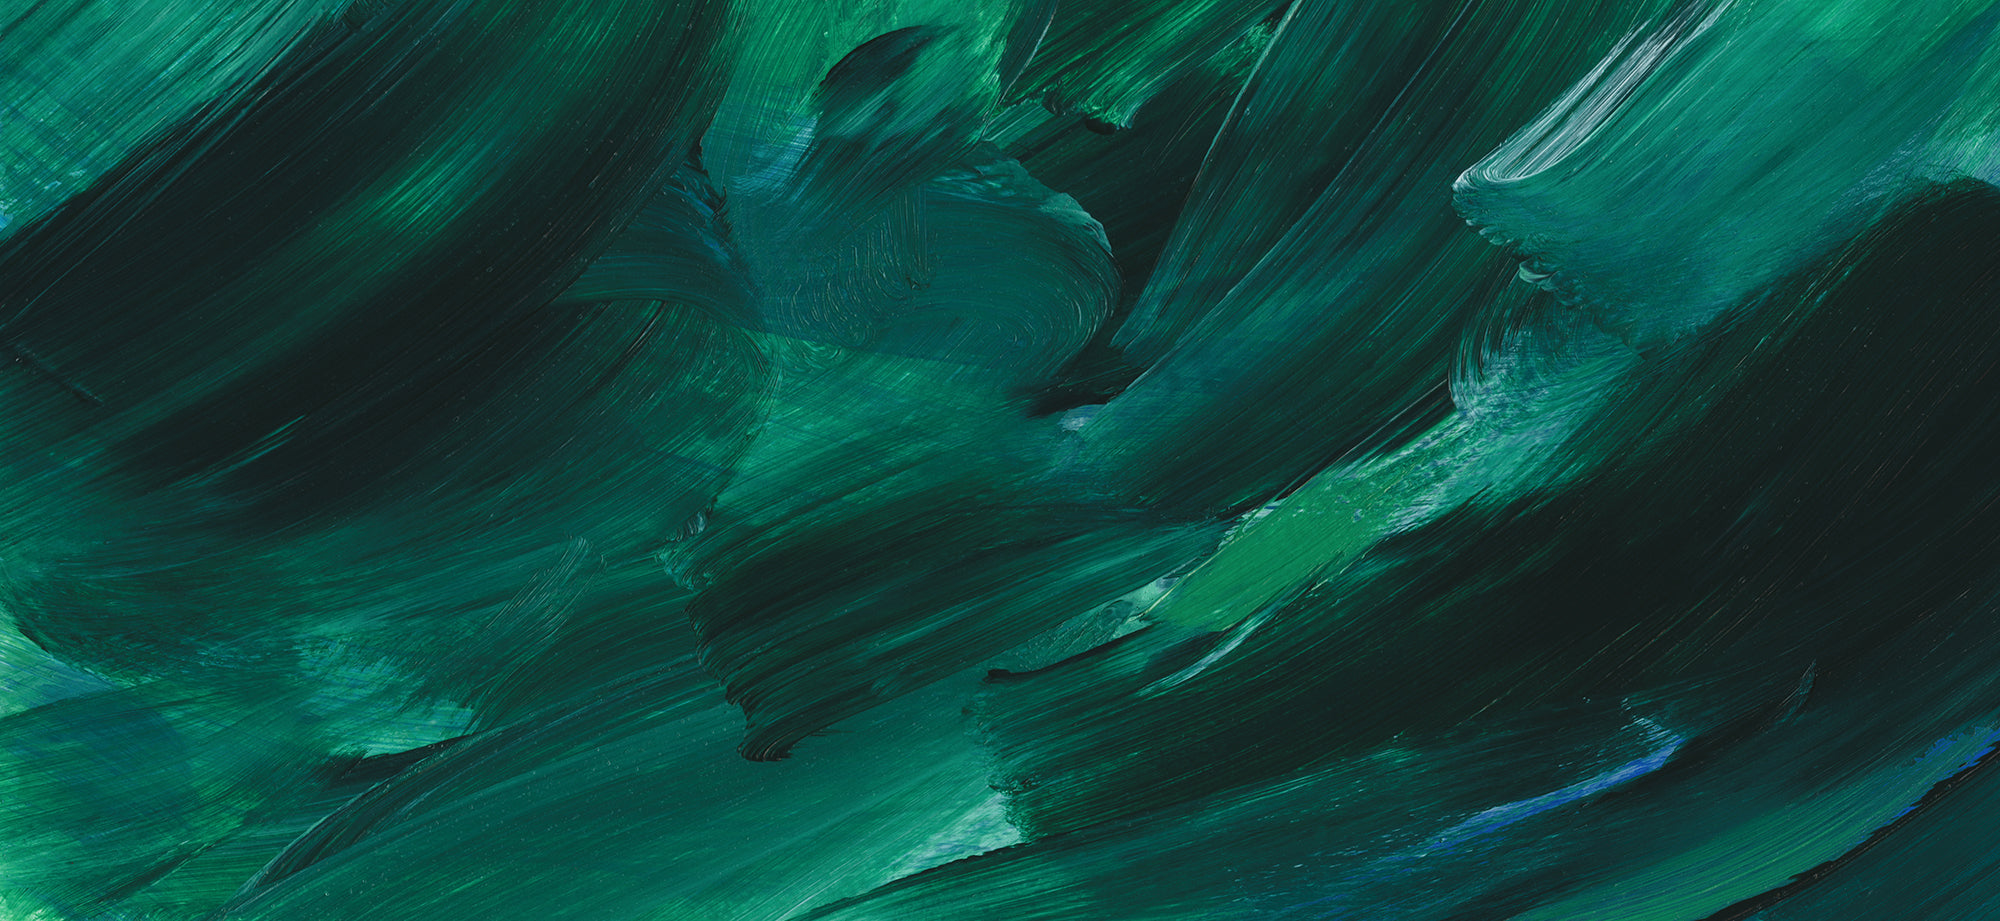 Emerald Brushstrokes - Abstract Emerald Textured Brush Strokes Wallpaper Mural